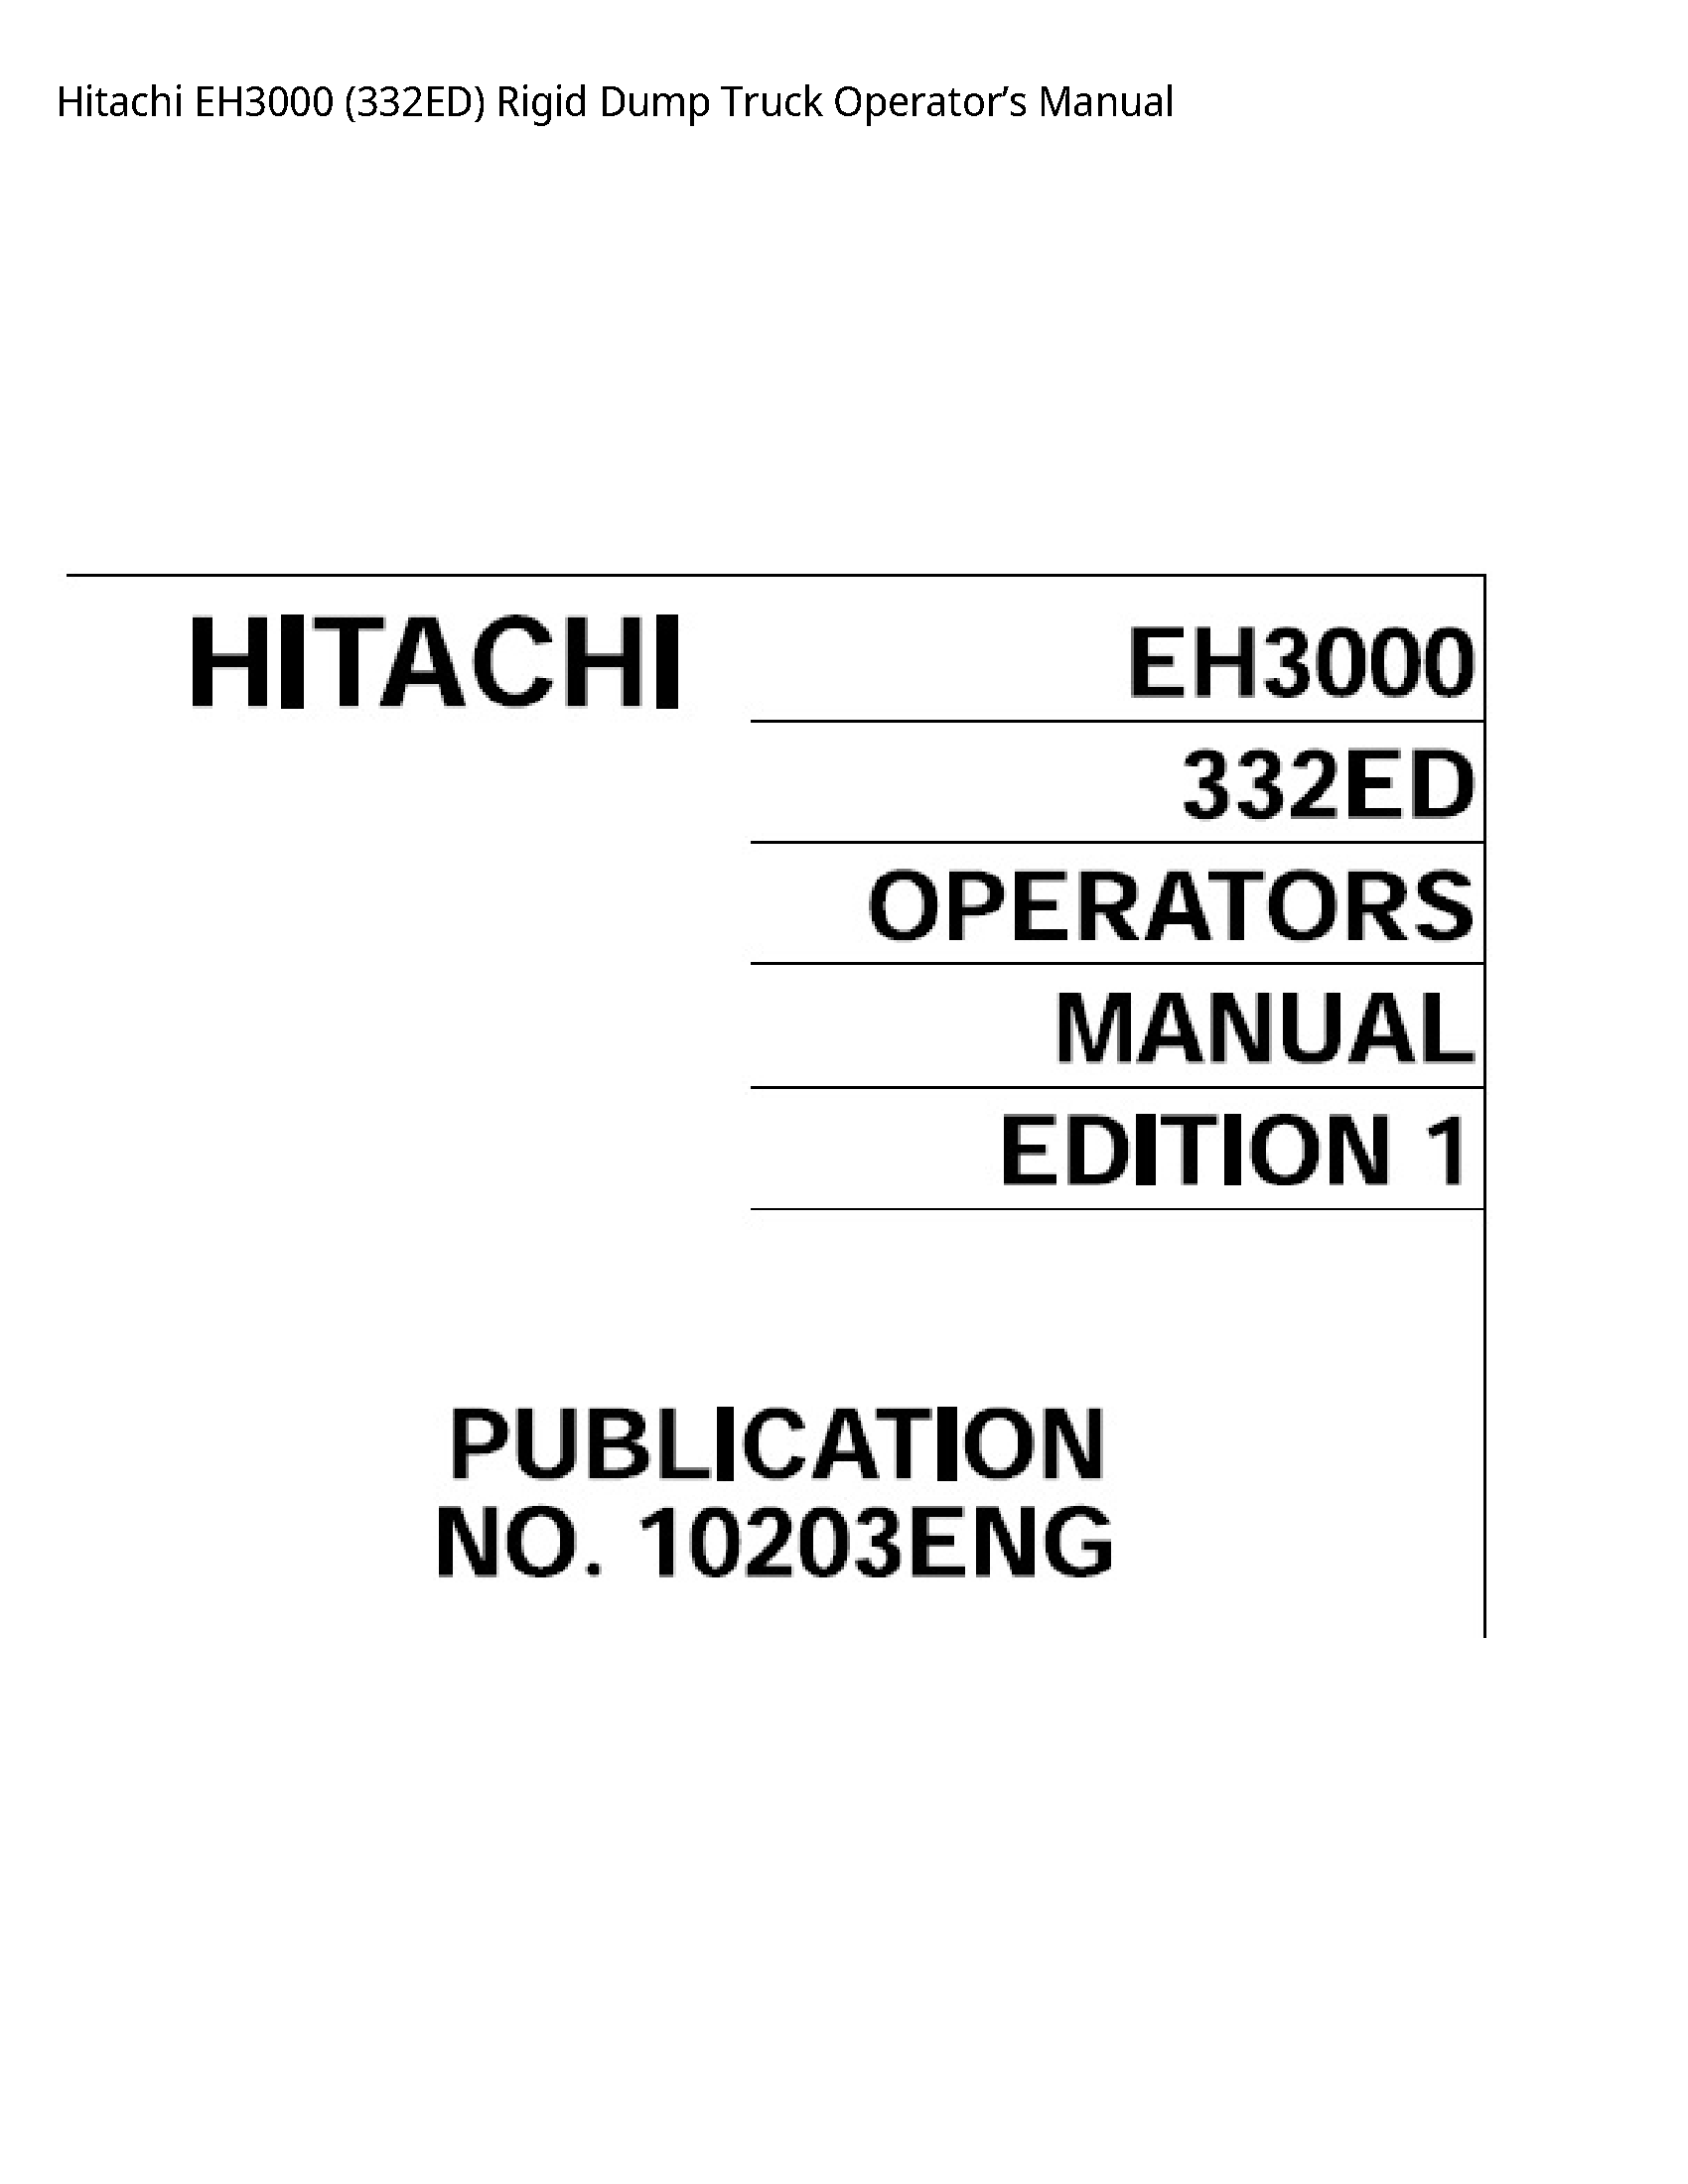 Hitachi EH3000 Rigid Dump Truck Operator’s manual